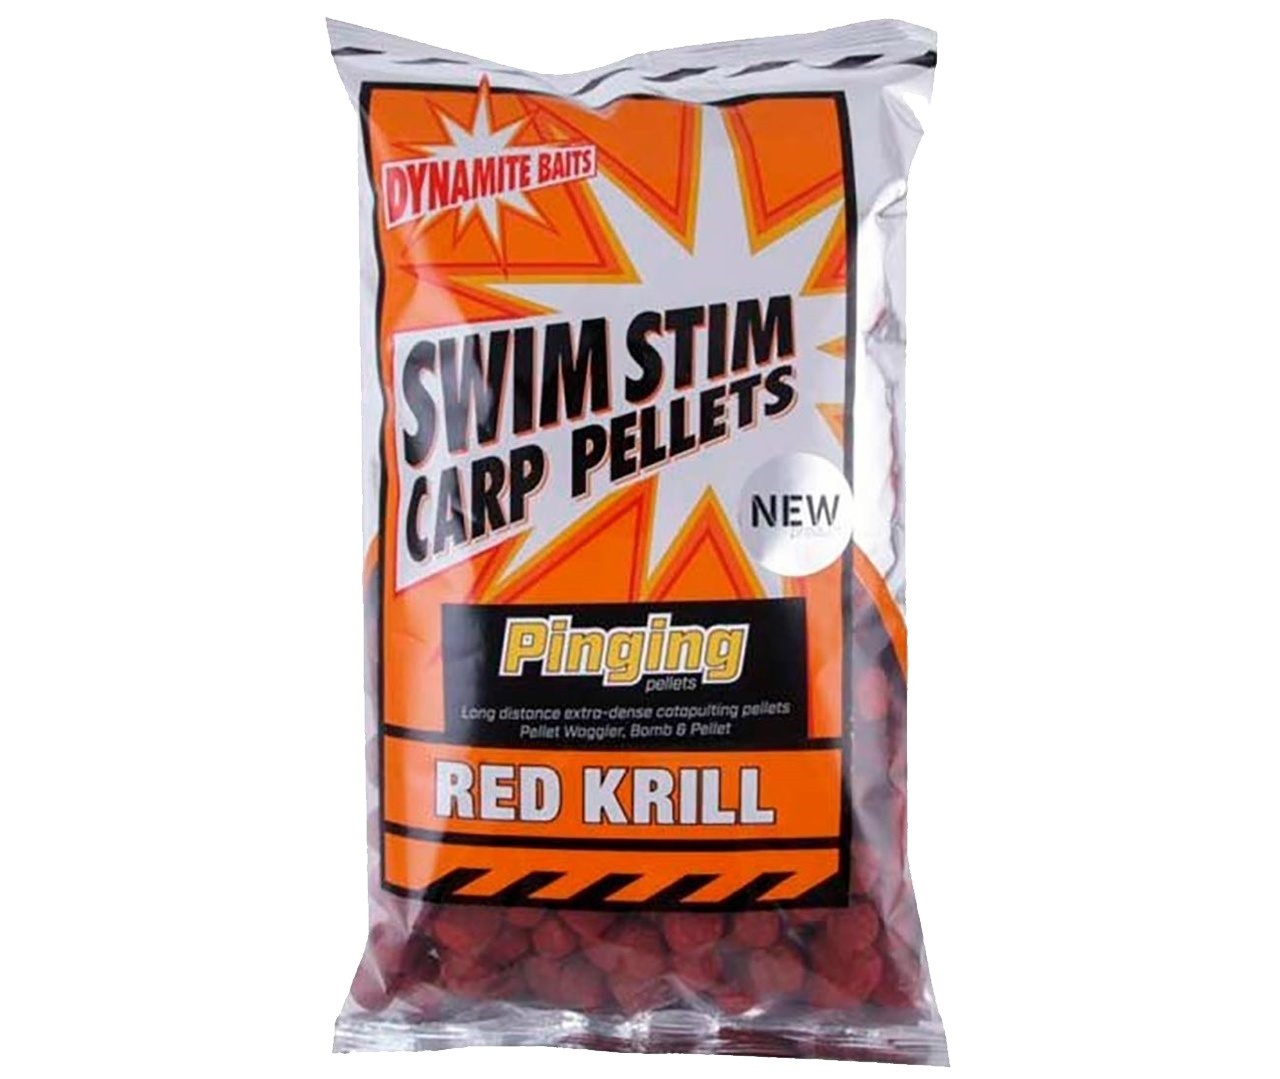 Пеллетс Dynamite Baits Swim Stim pinging pellets red krill 13мм 900гр - фото 1